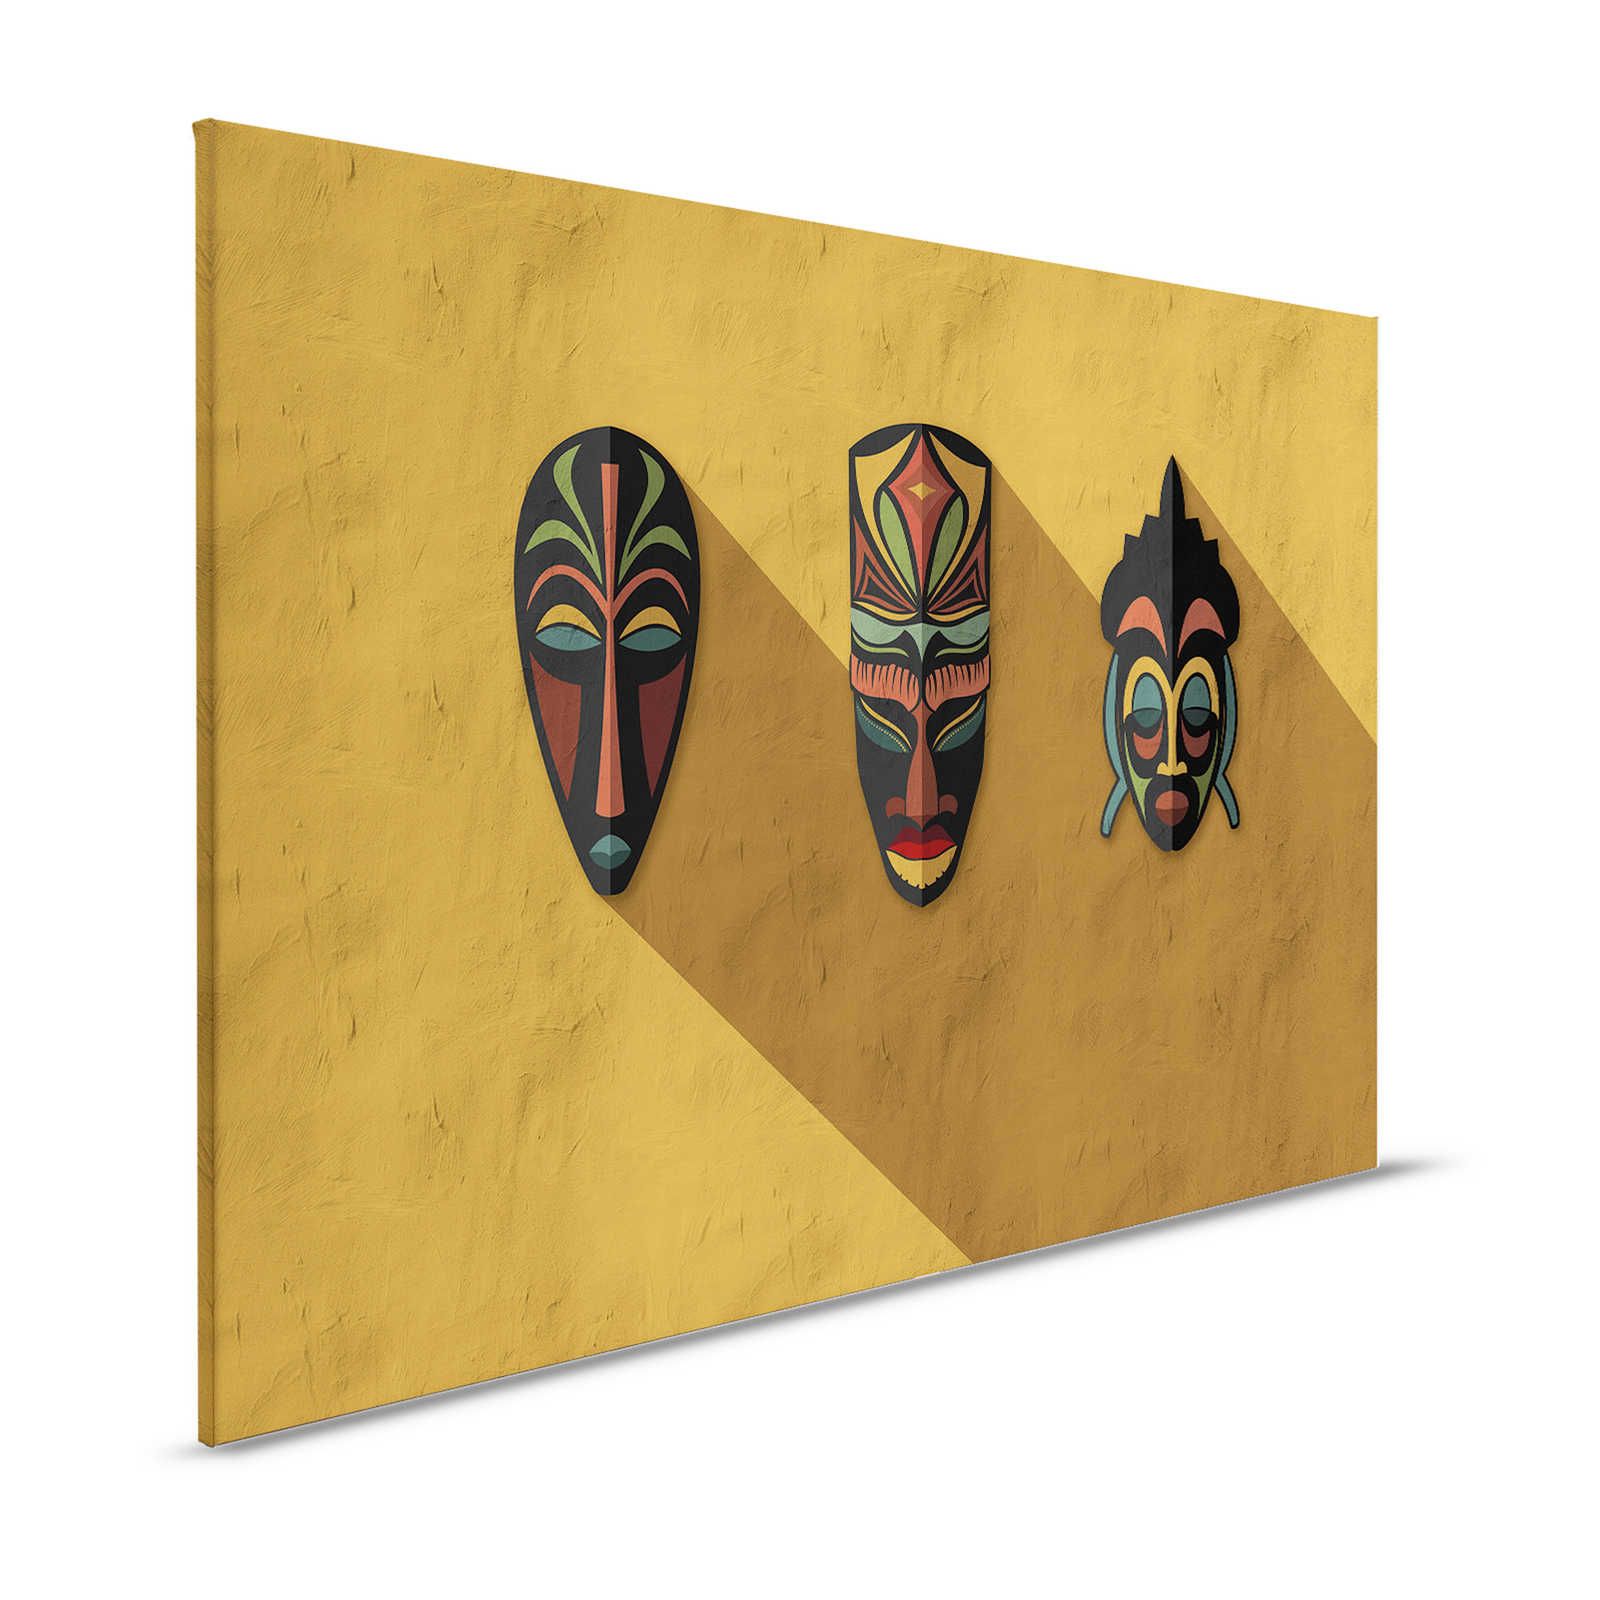 Zulu 1 - Toile jaune moutarde, Africa Masks Zulu Style - 1,20 m x 0,80 m
